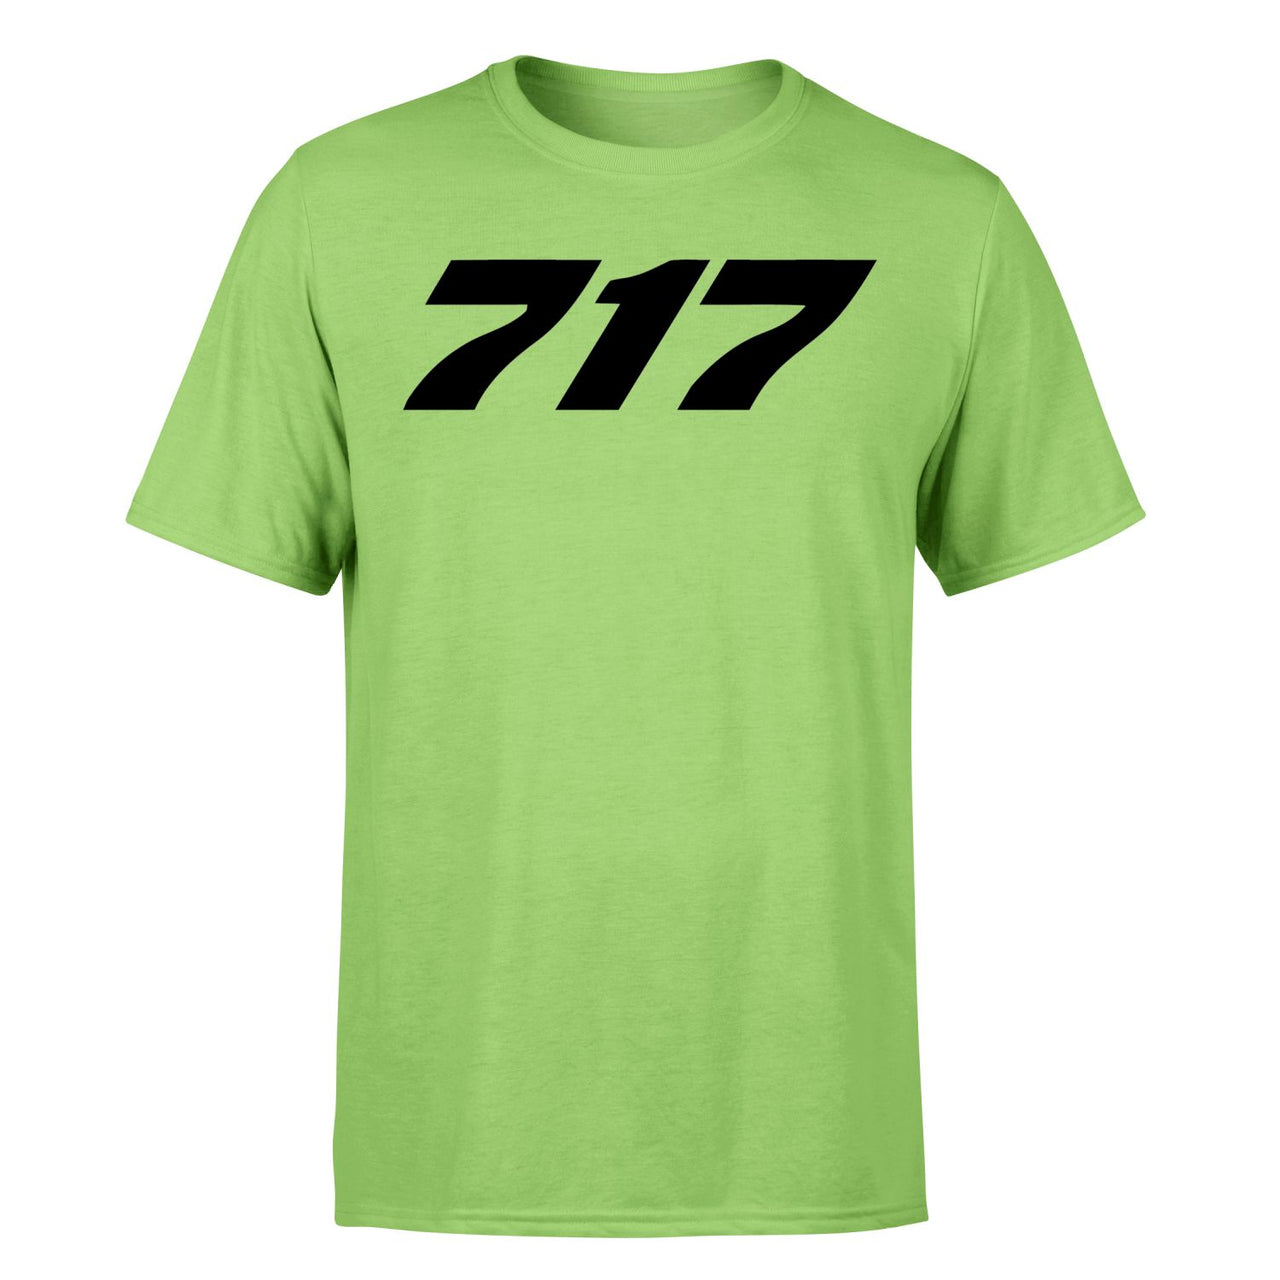 717 Flat Text Designed T-Shirts